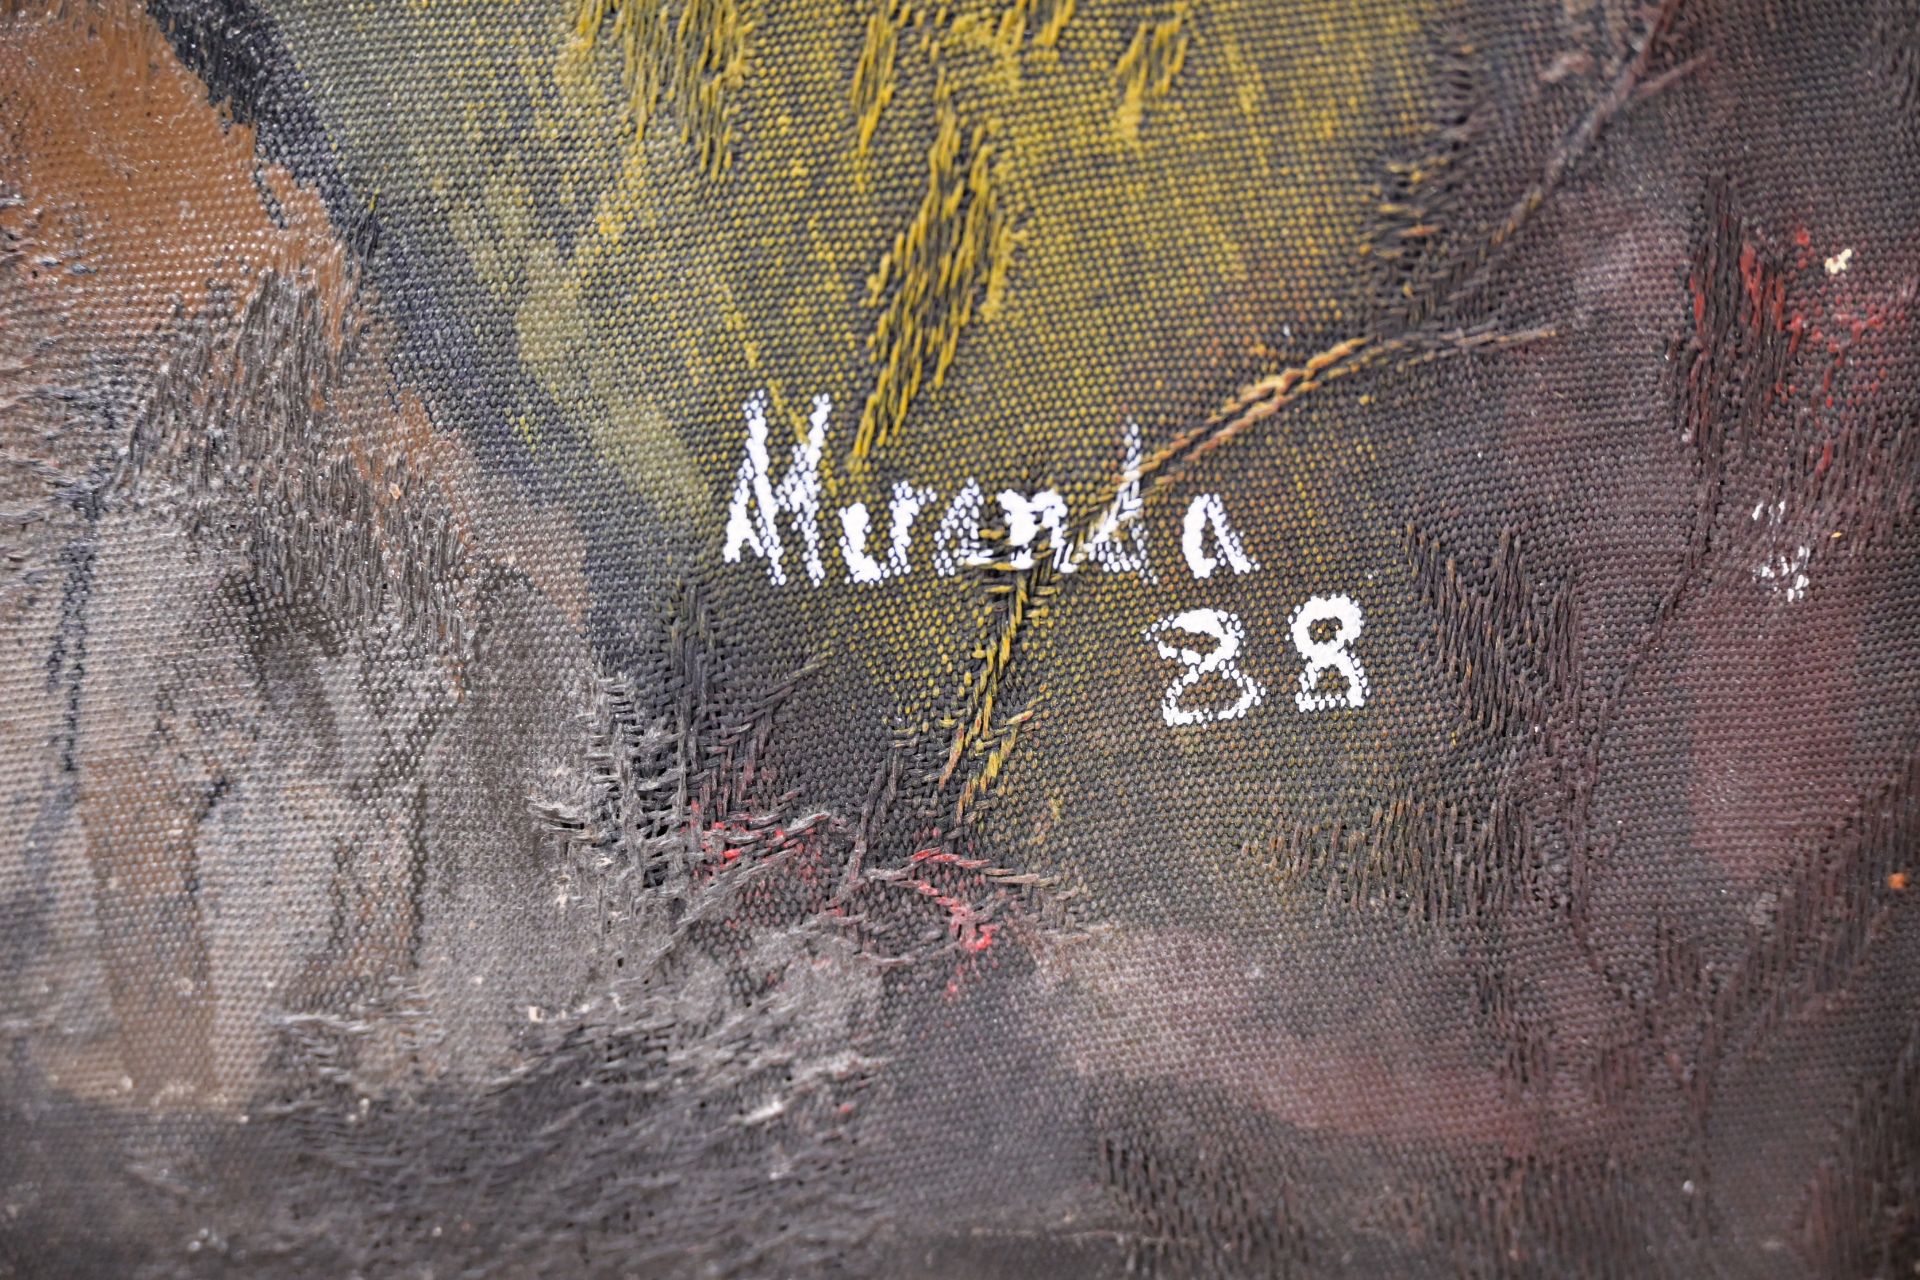 European painting, Miranda, "Forbidden fruit" 1988, oil on fabric. - Image 4 of 7